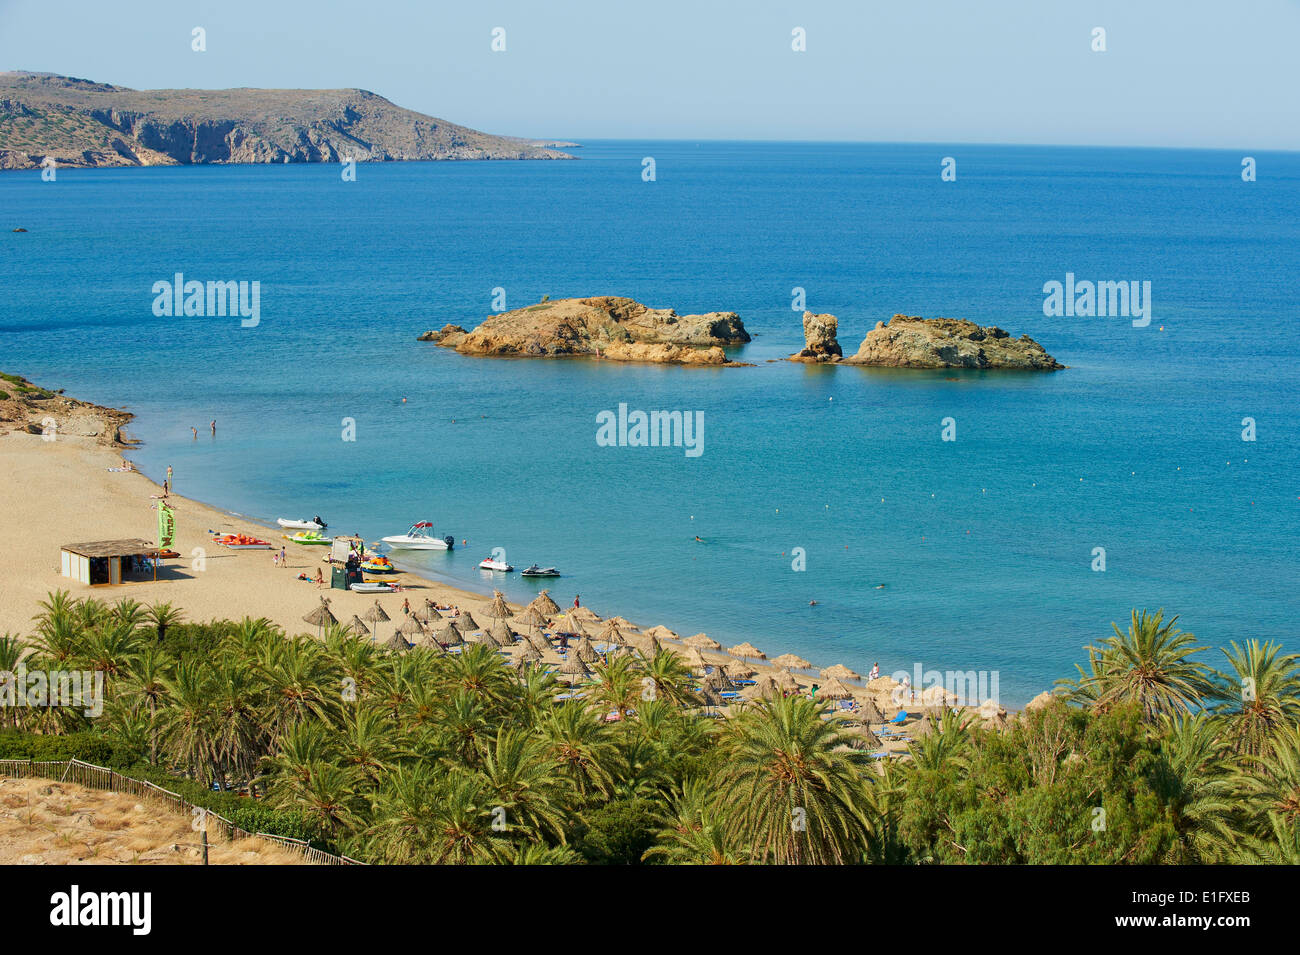 Greece, Crete island, Vai beach and palm trees, eastern Crete Stock Photo